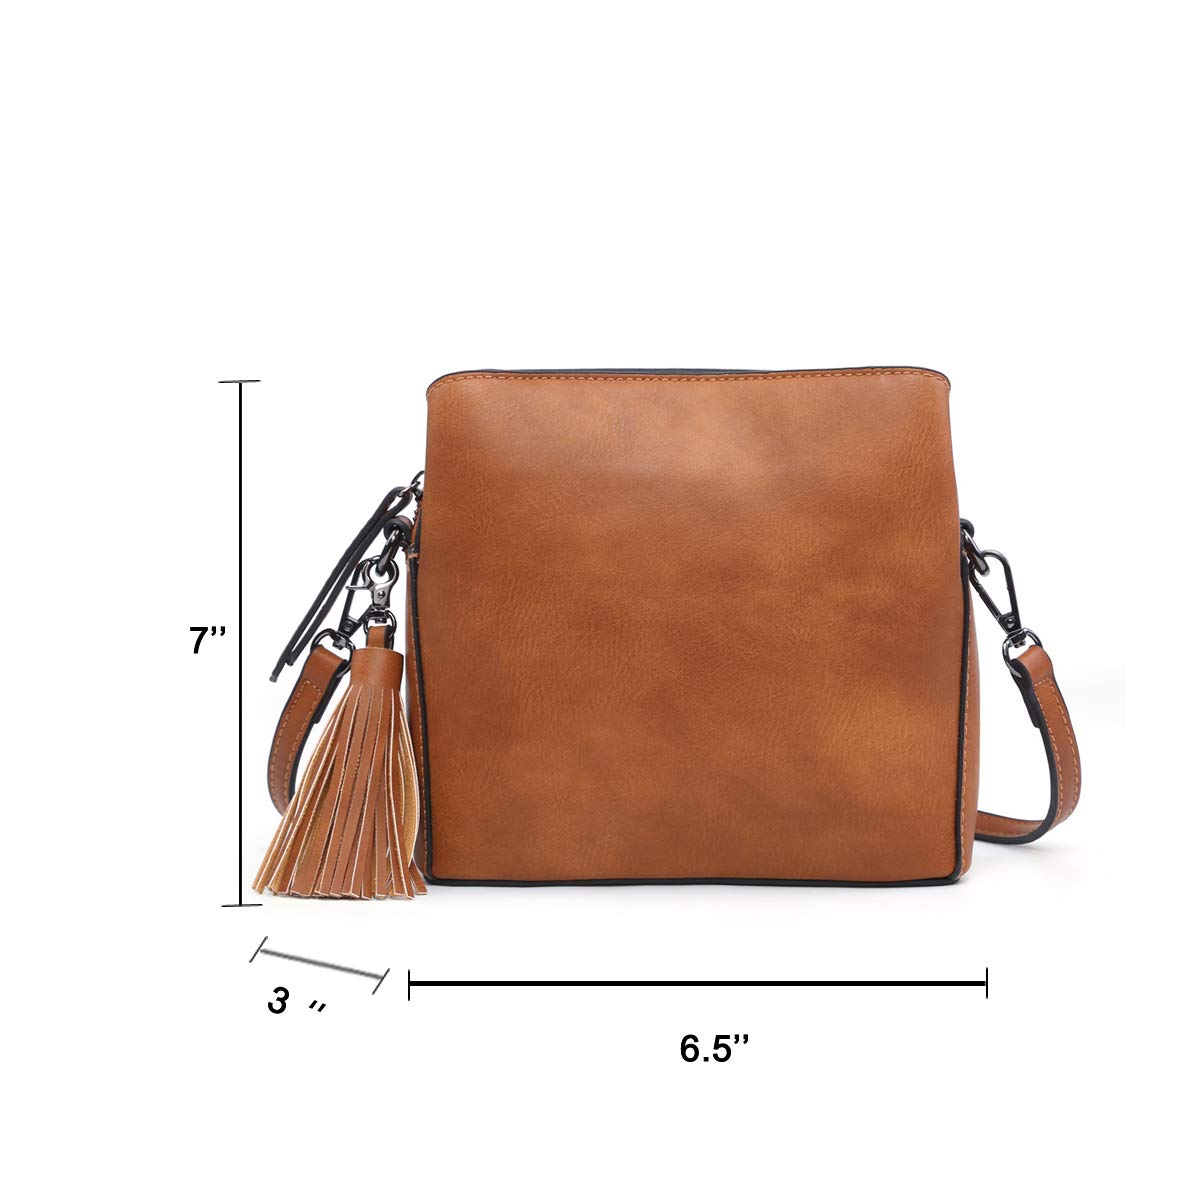 Small Crossbody Bag for Women Mini Shoulder Bag Cell Phone Bag, Tan, Size Small | eBay